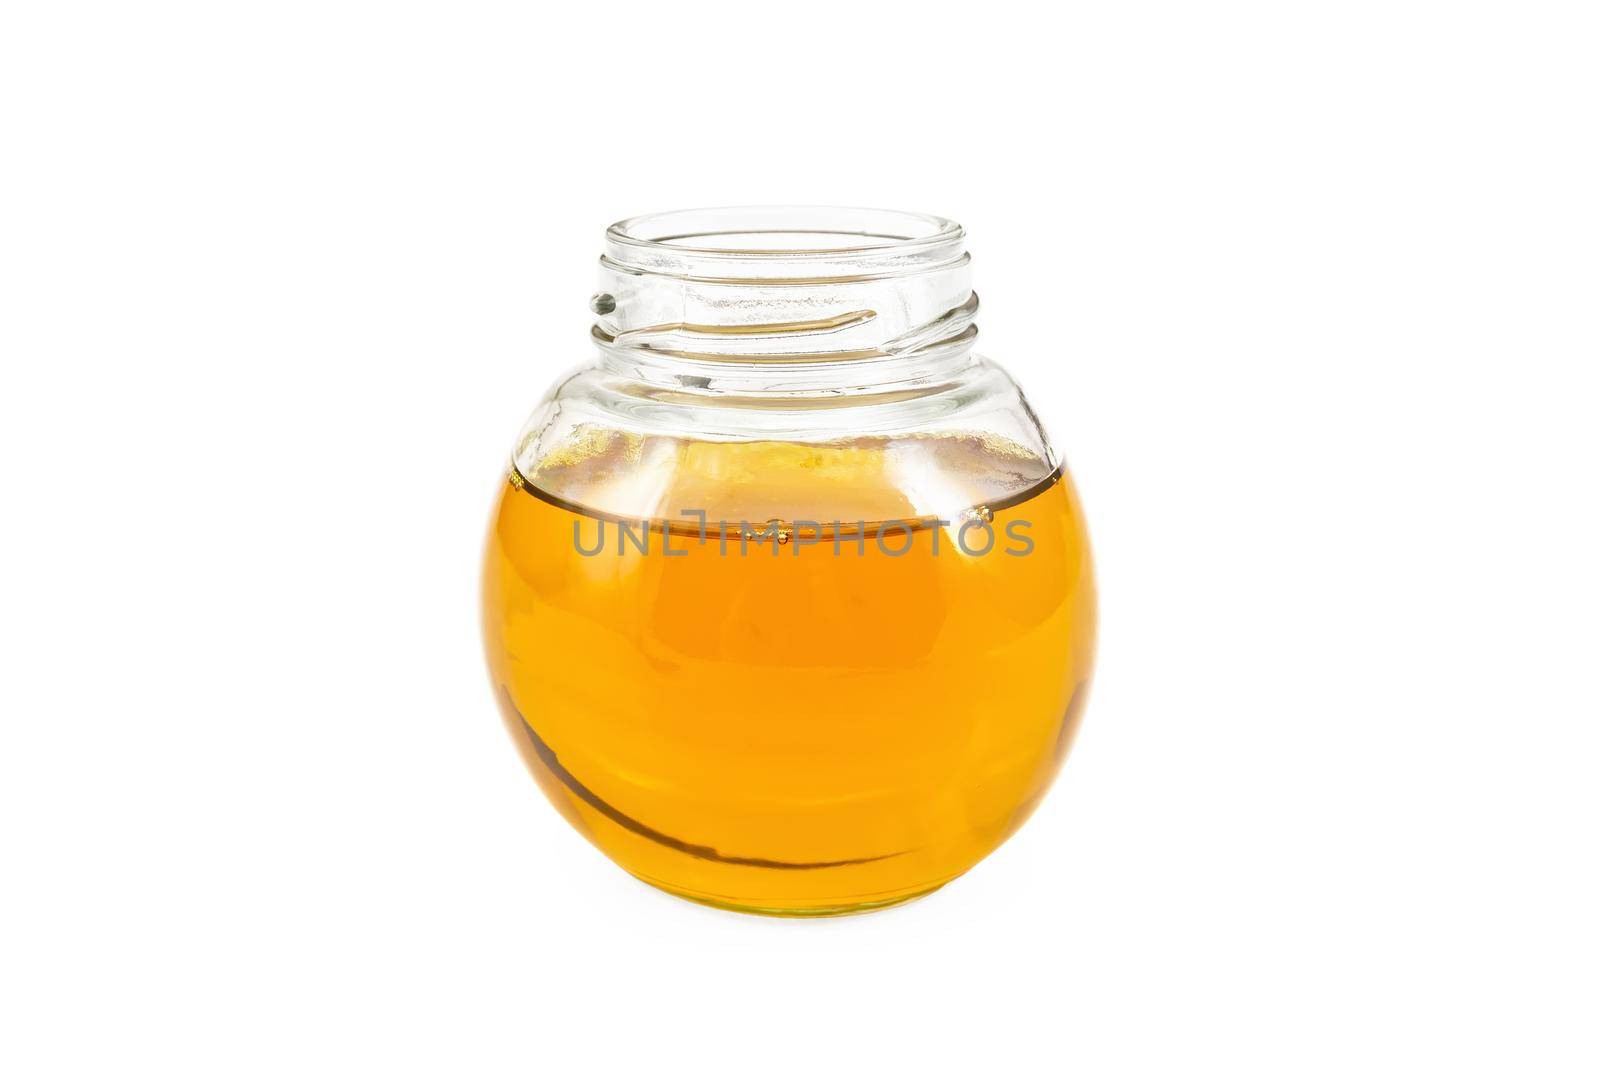 Oil vegetable in glass jar by rezkrr